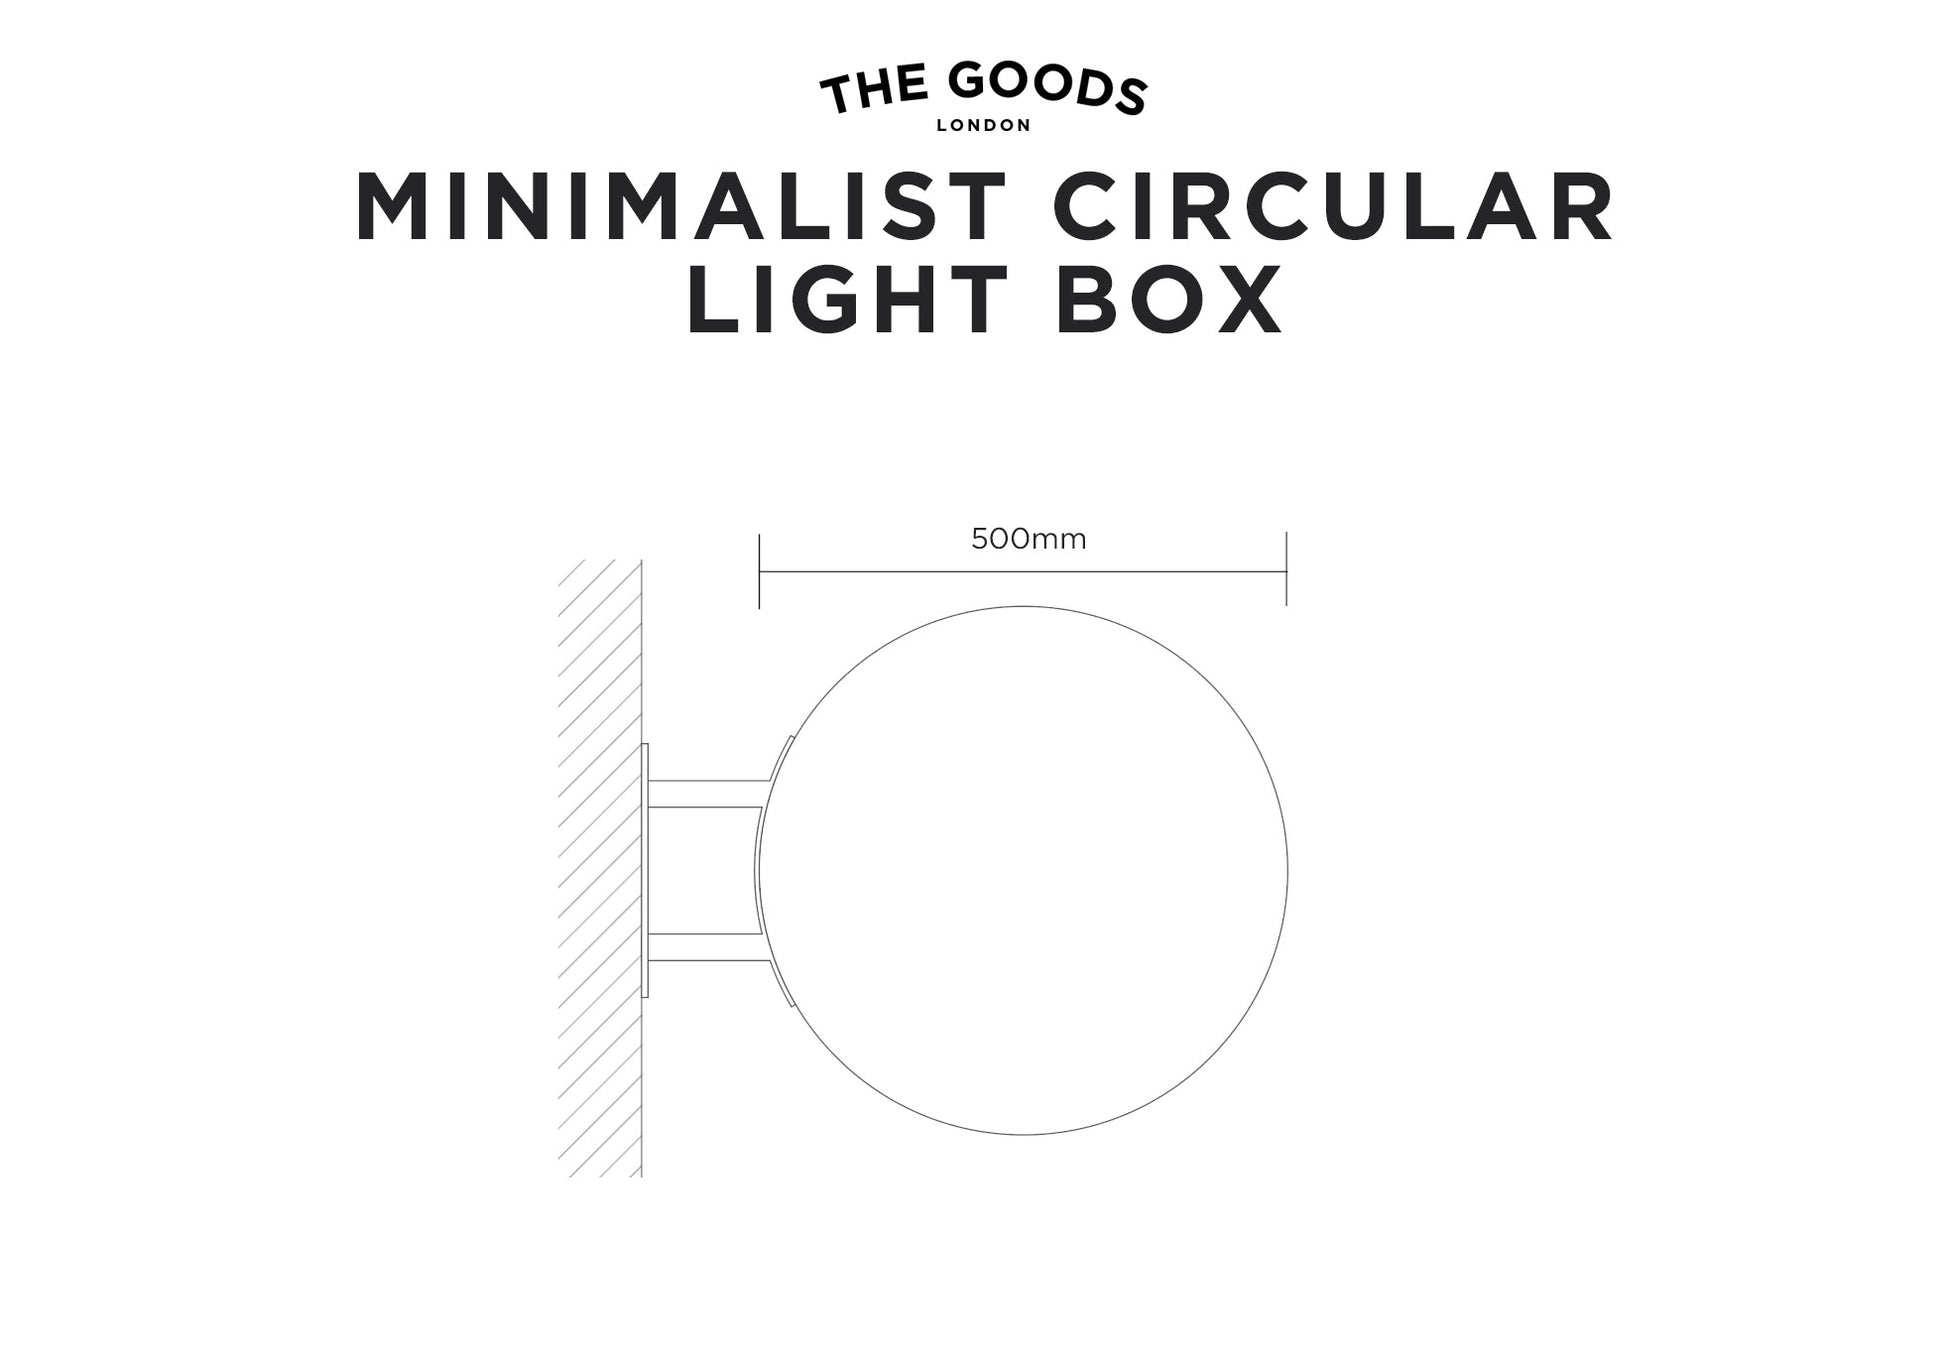  Circular Light Box Sign Technical Drawing